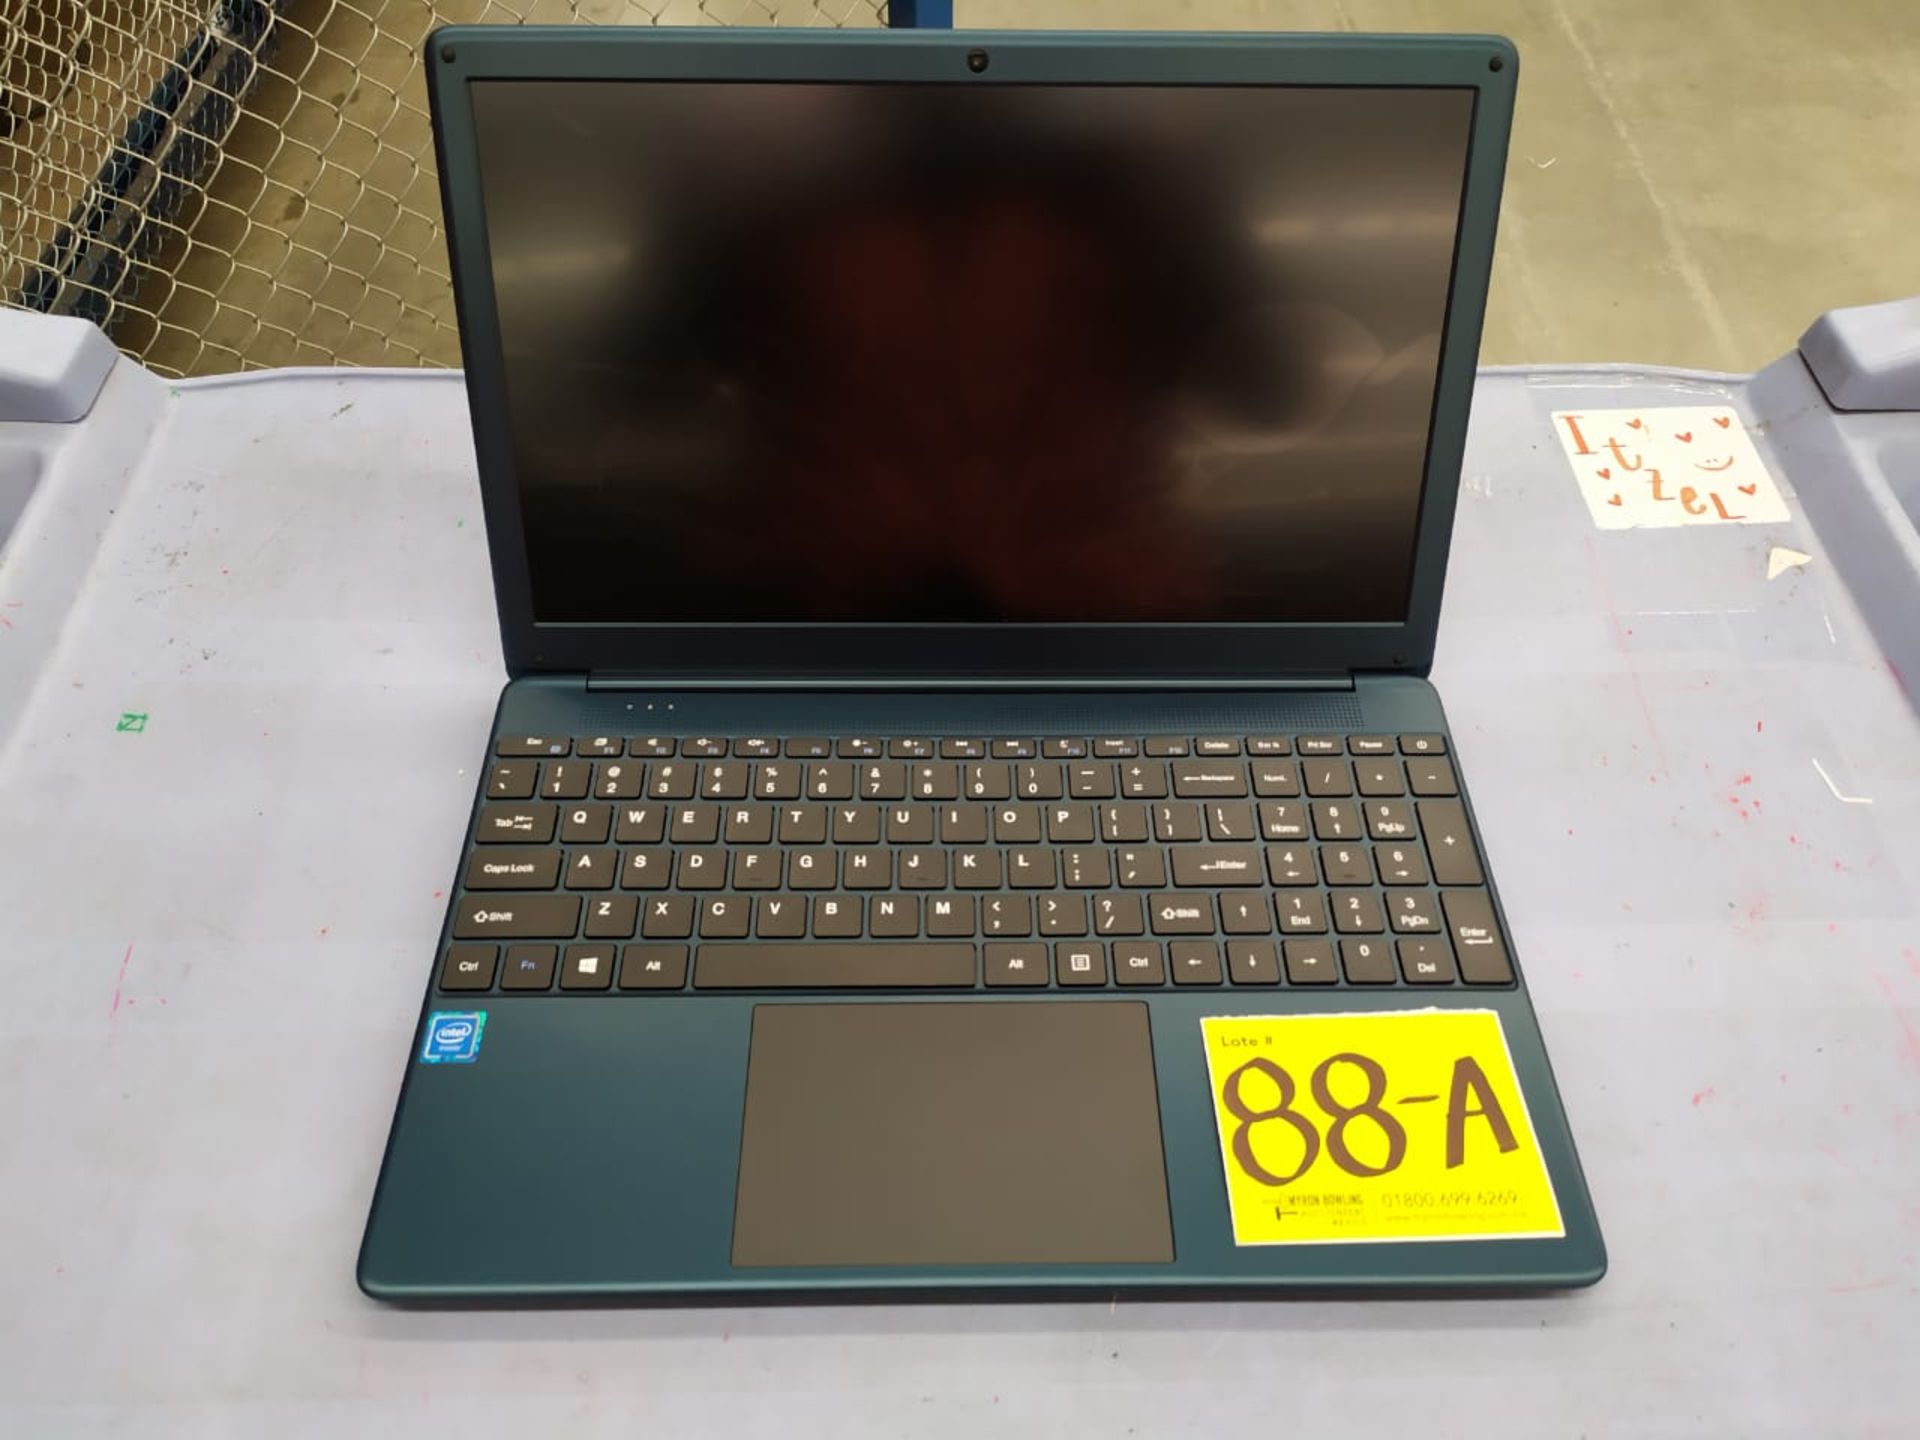 2 Computadoras tipo Laptop marca Evoo modelo EVC156-1 N/S EVC156-1BL20J01189 - Image 4 of 24